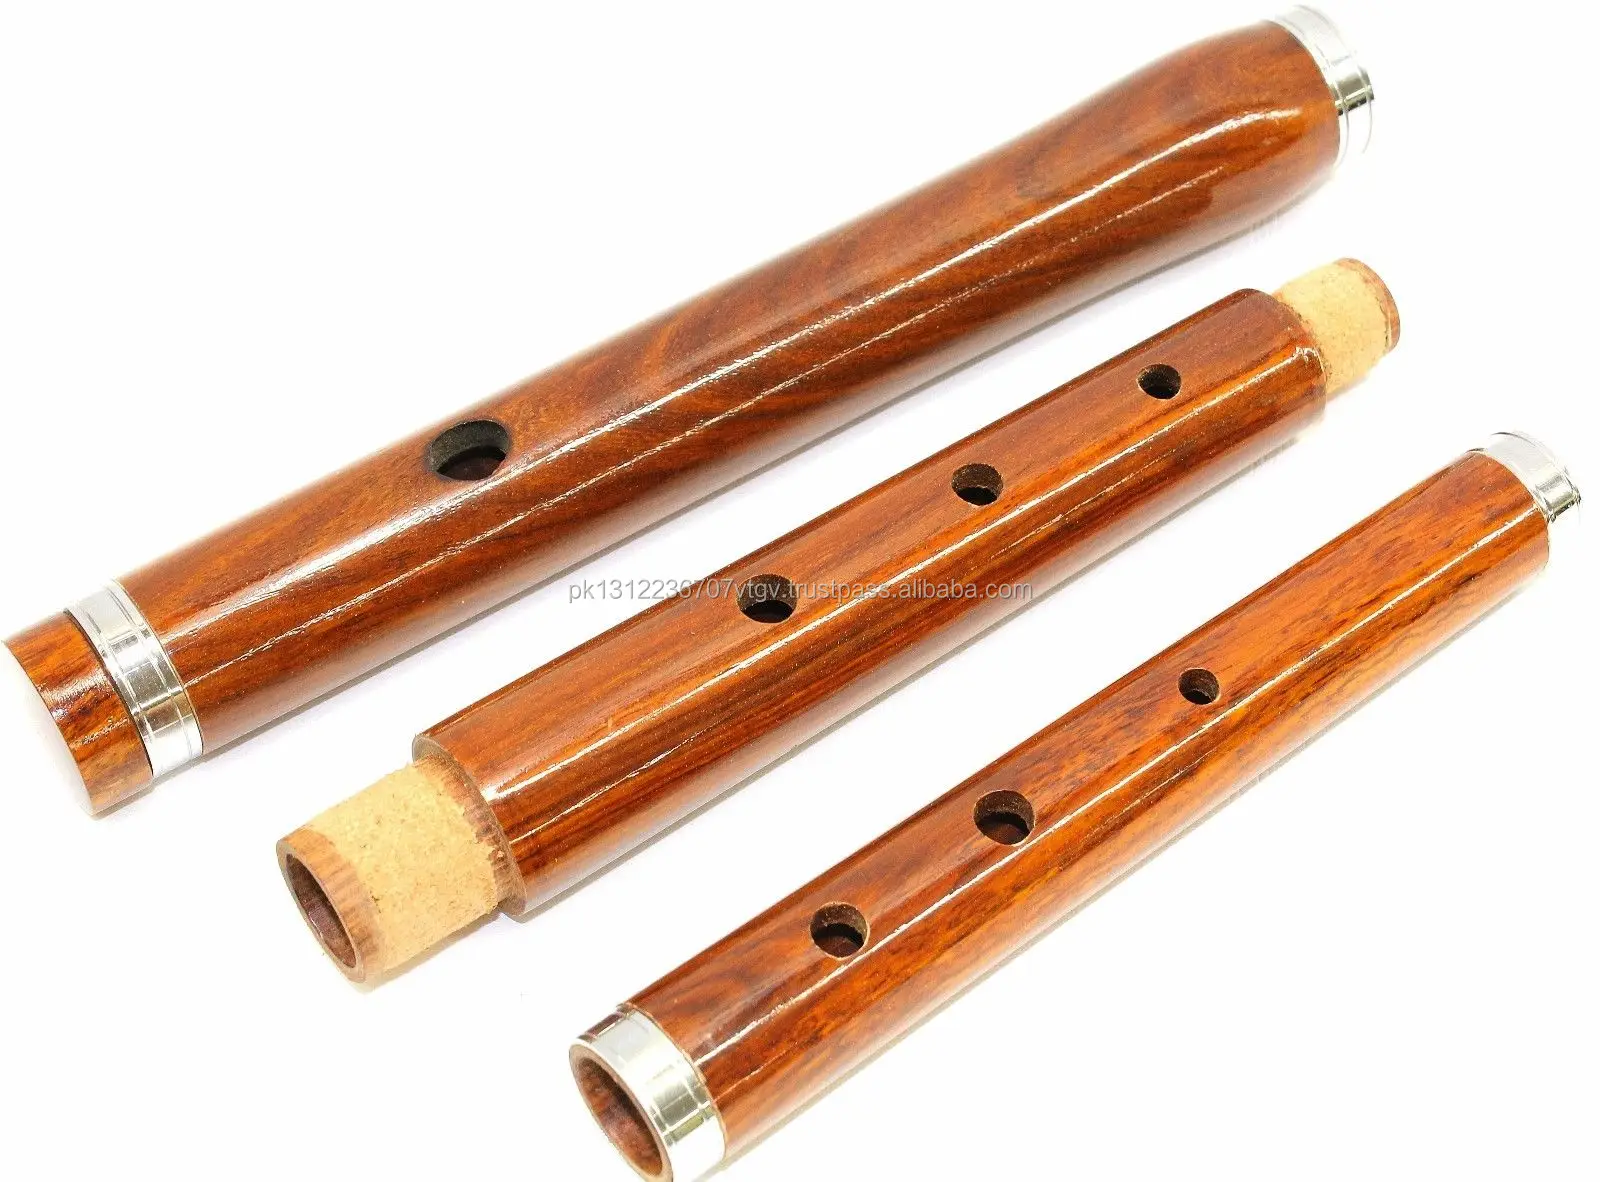 3 Piece Professional Irish D Flute With Hard Case. - Buy Irish D Flute